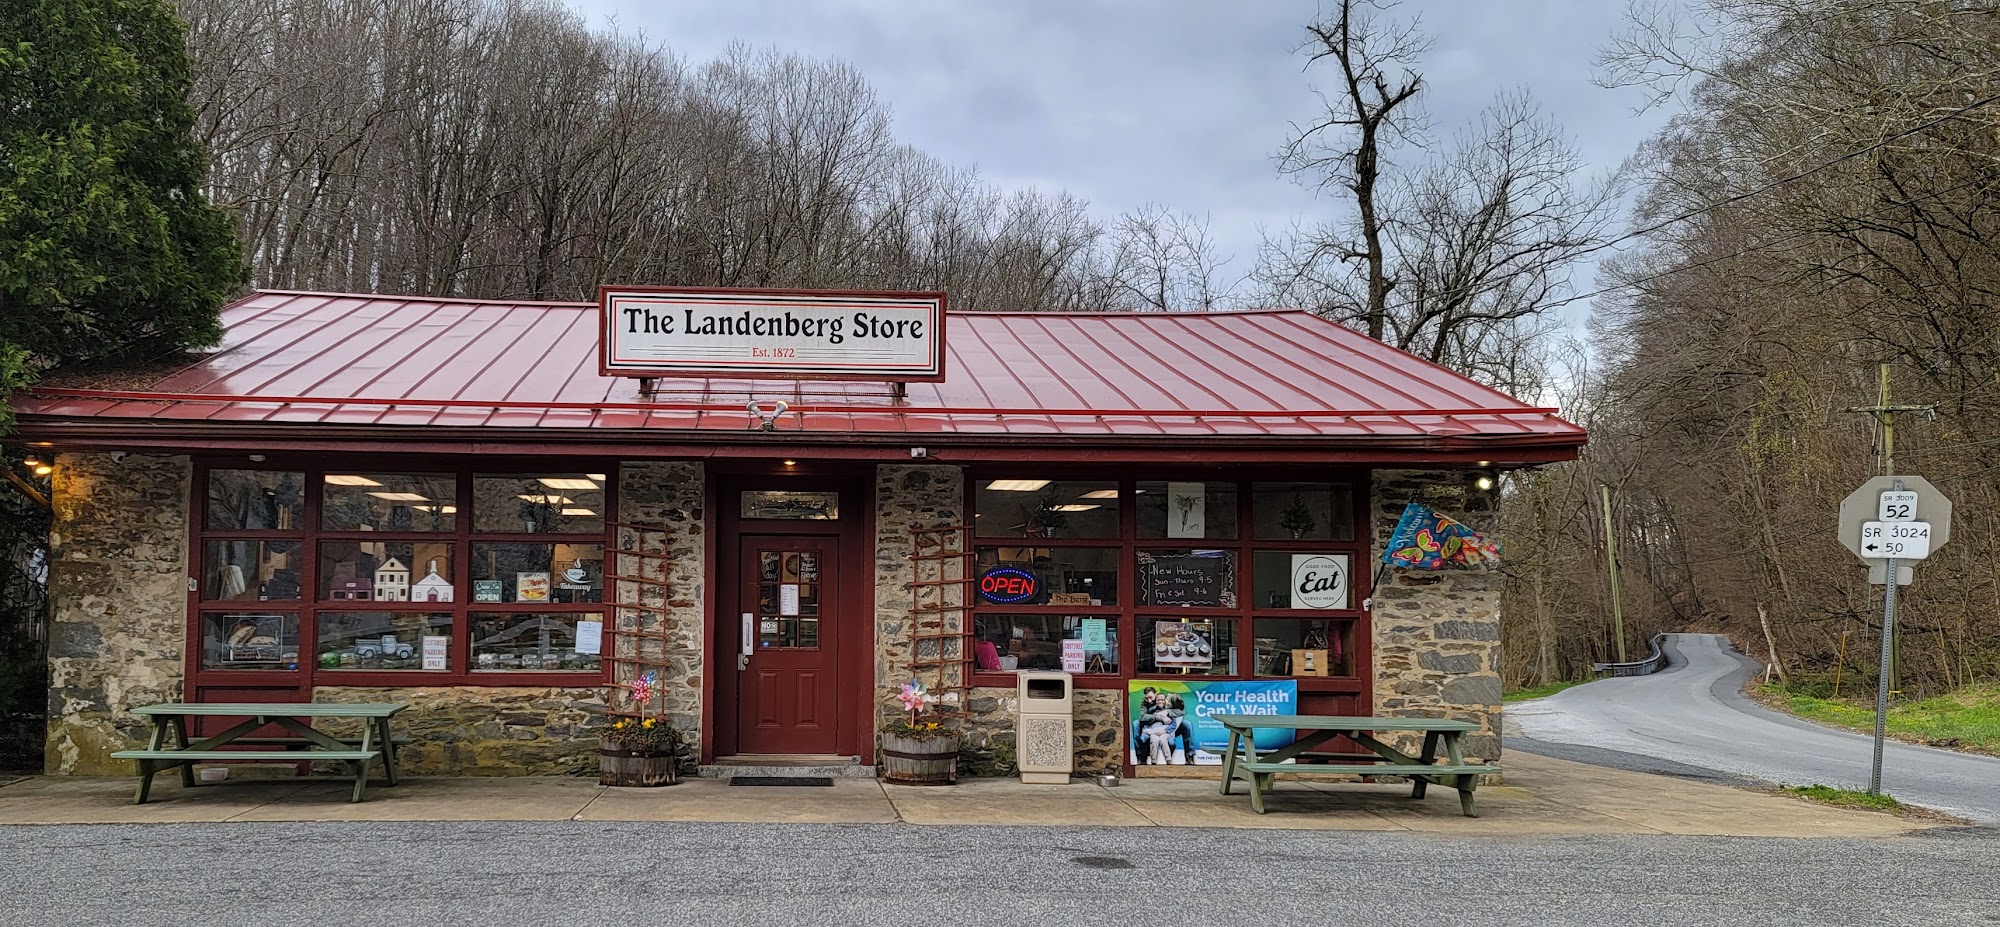 The Landenberg Store